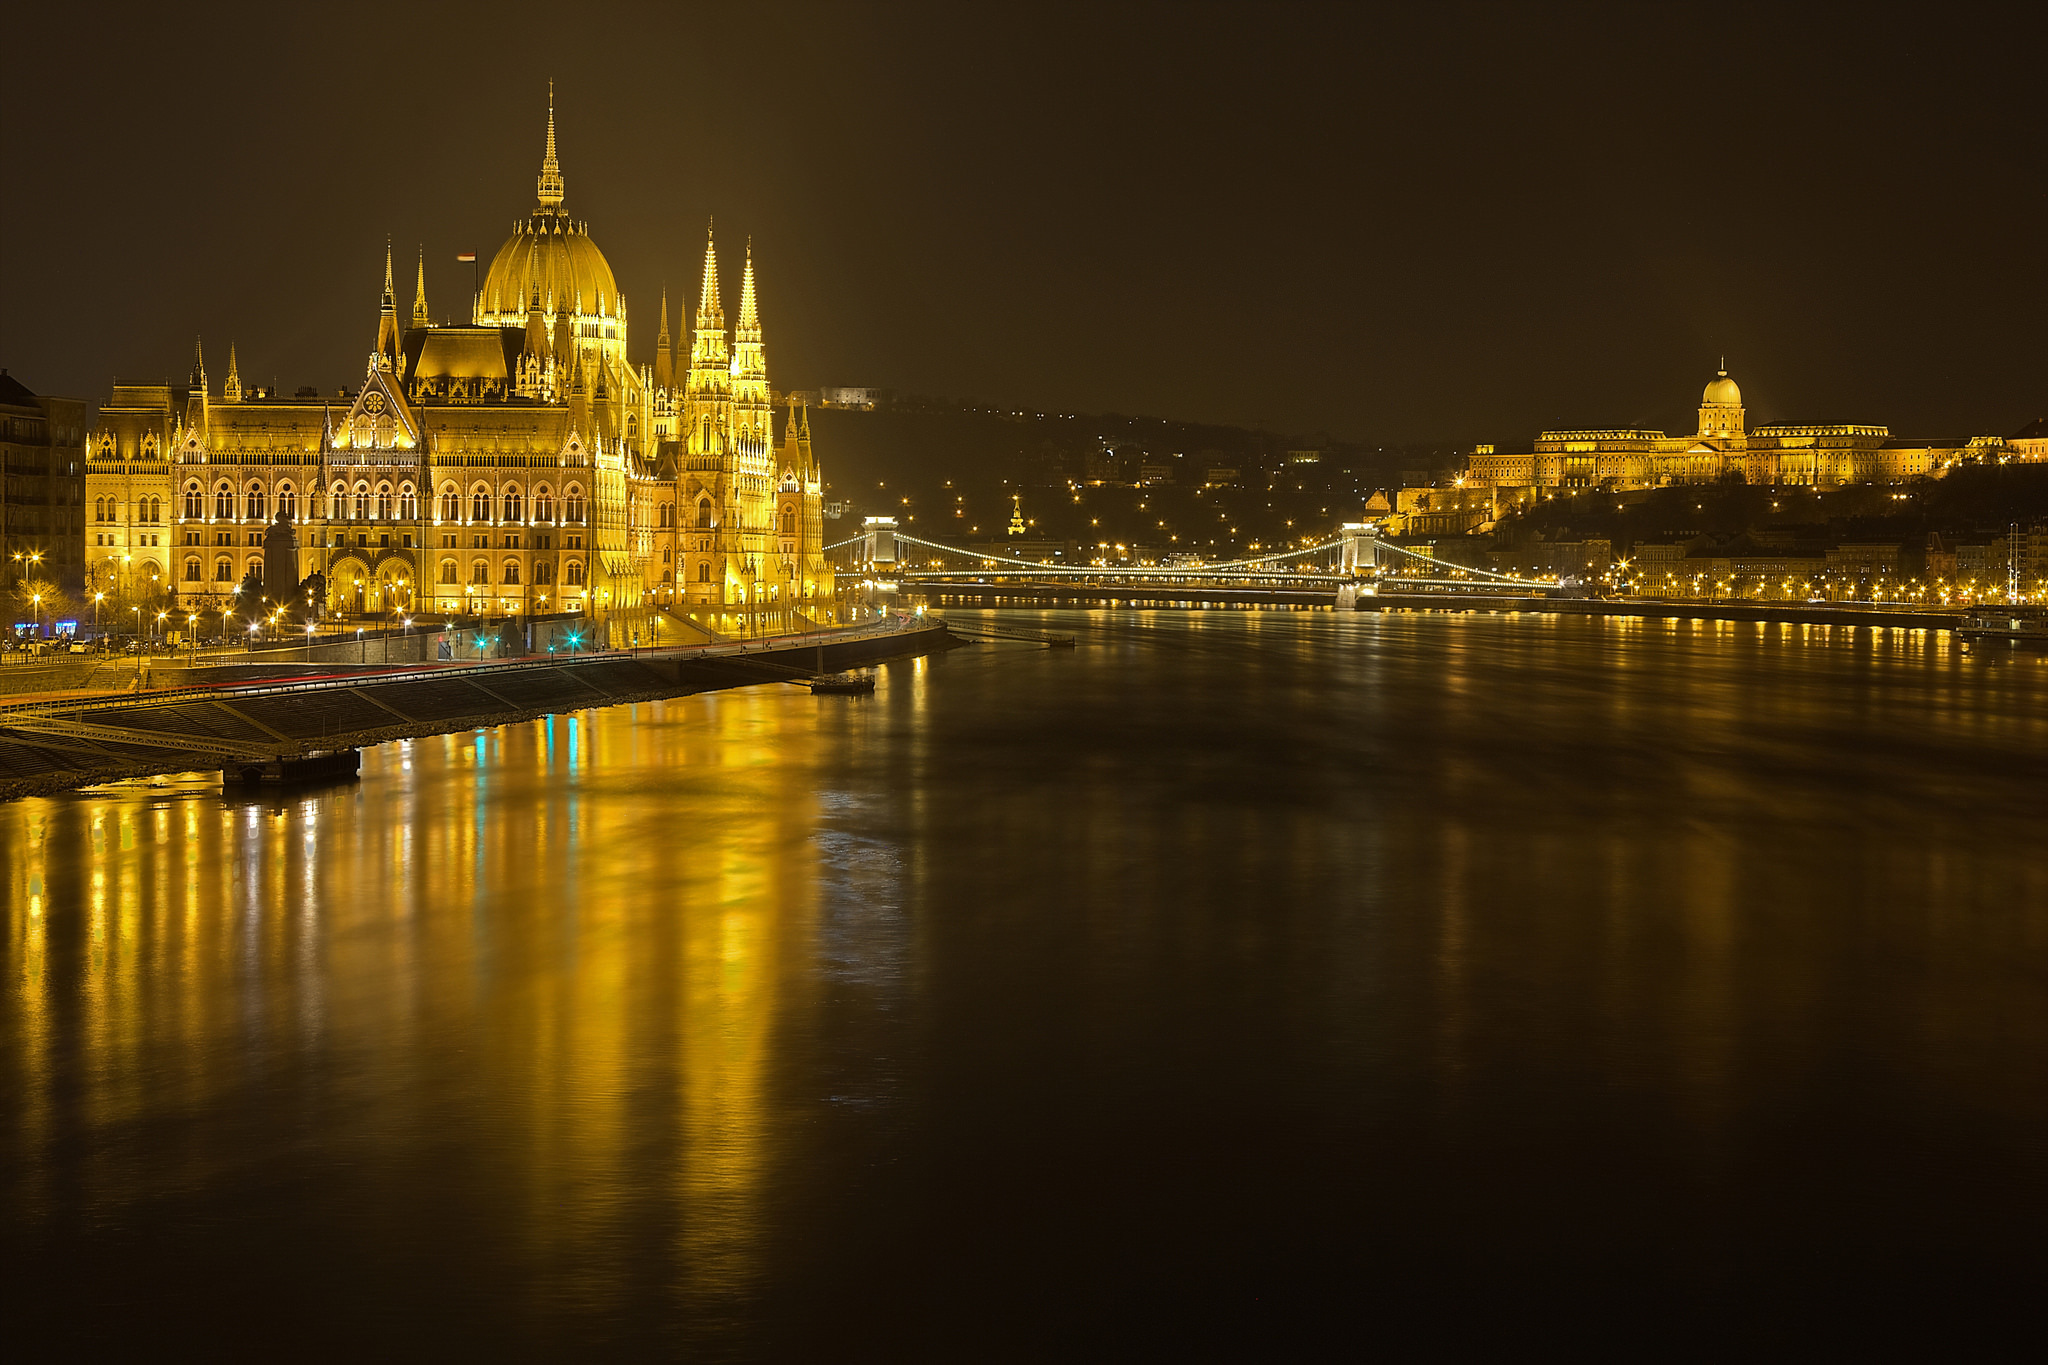  Danube HQ Background Images